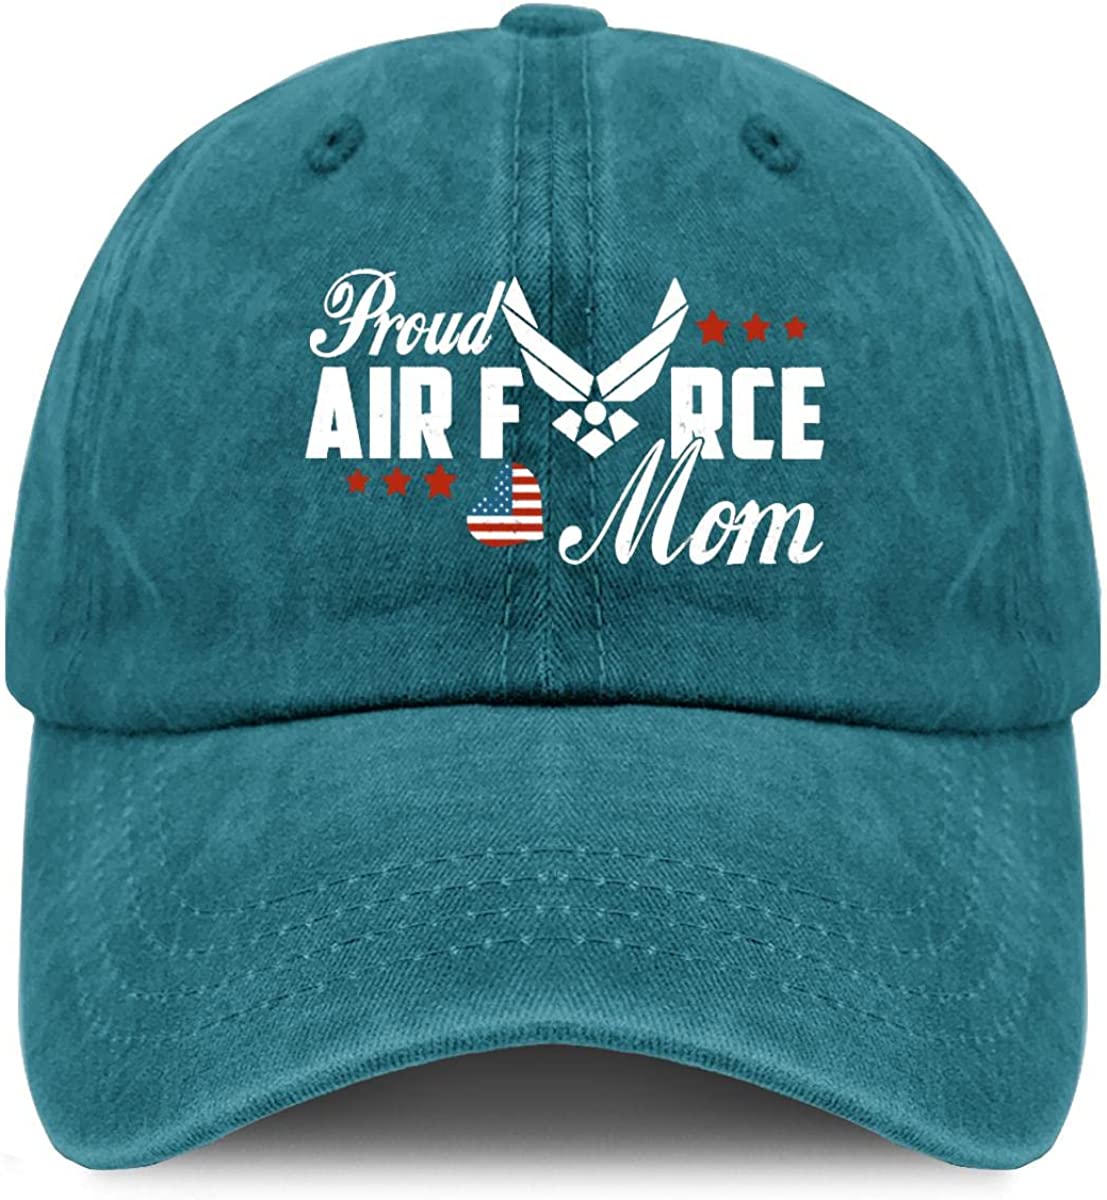 Baseball Cap for Men Fashion Caps Mens Flexfit Proud Mom Air Force Dad Caps Cotton for Fishing Blue